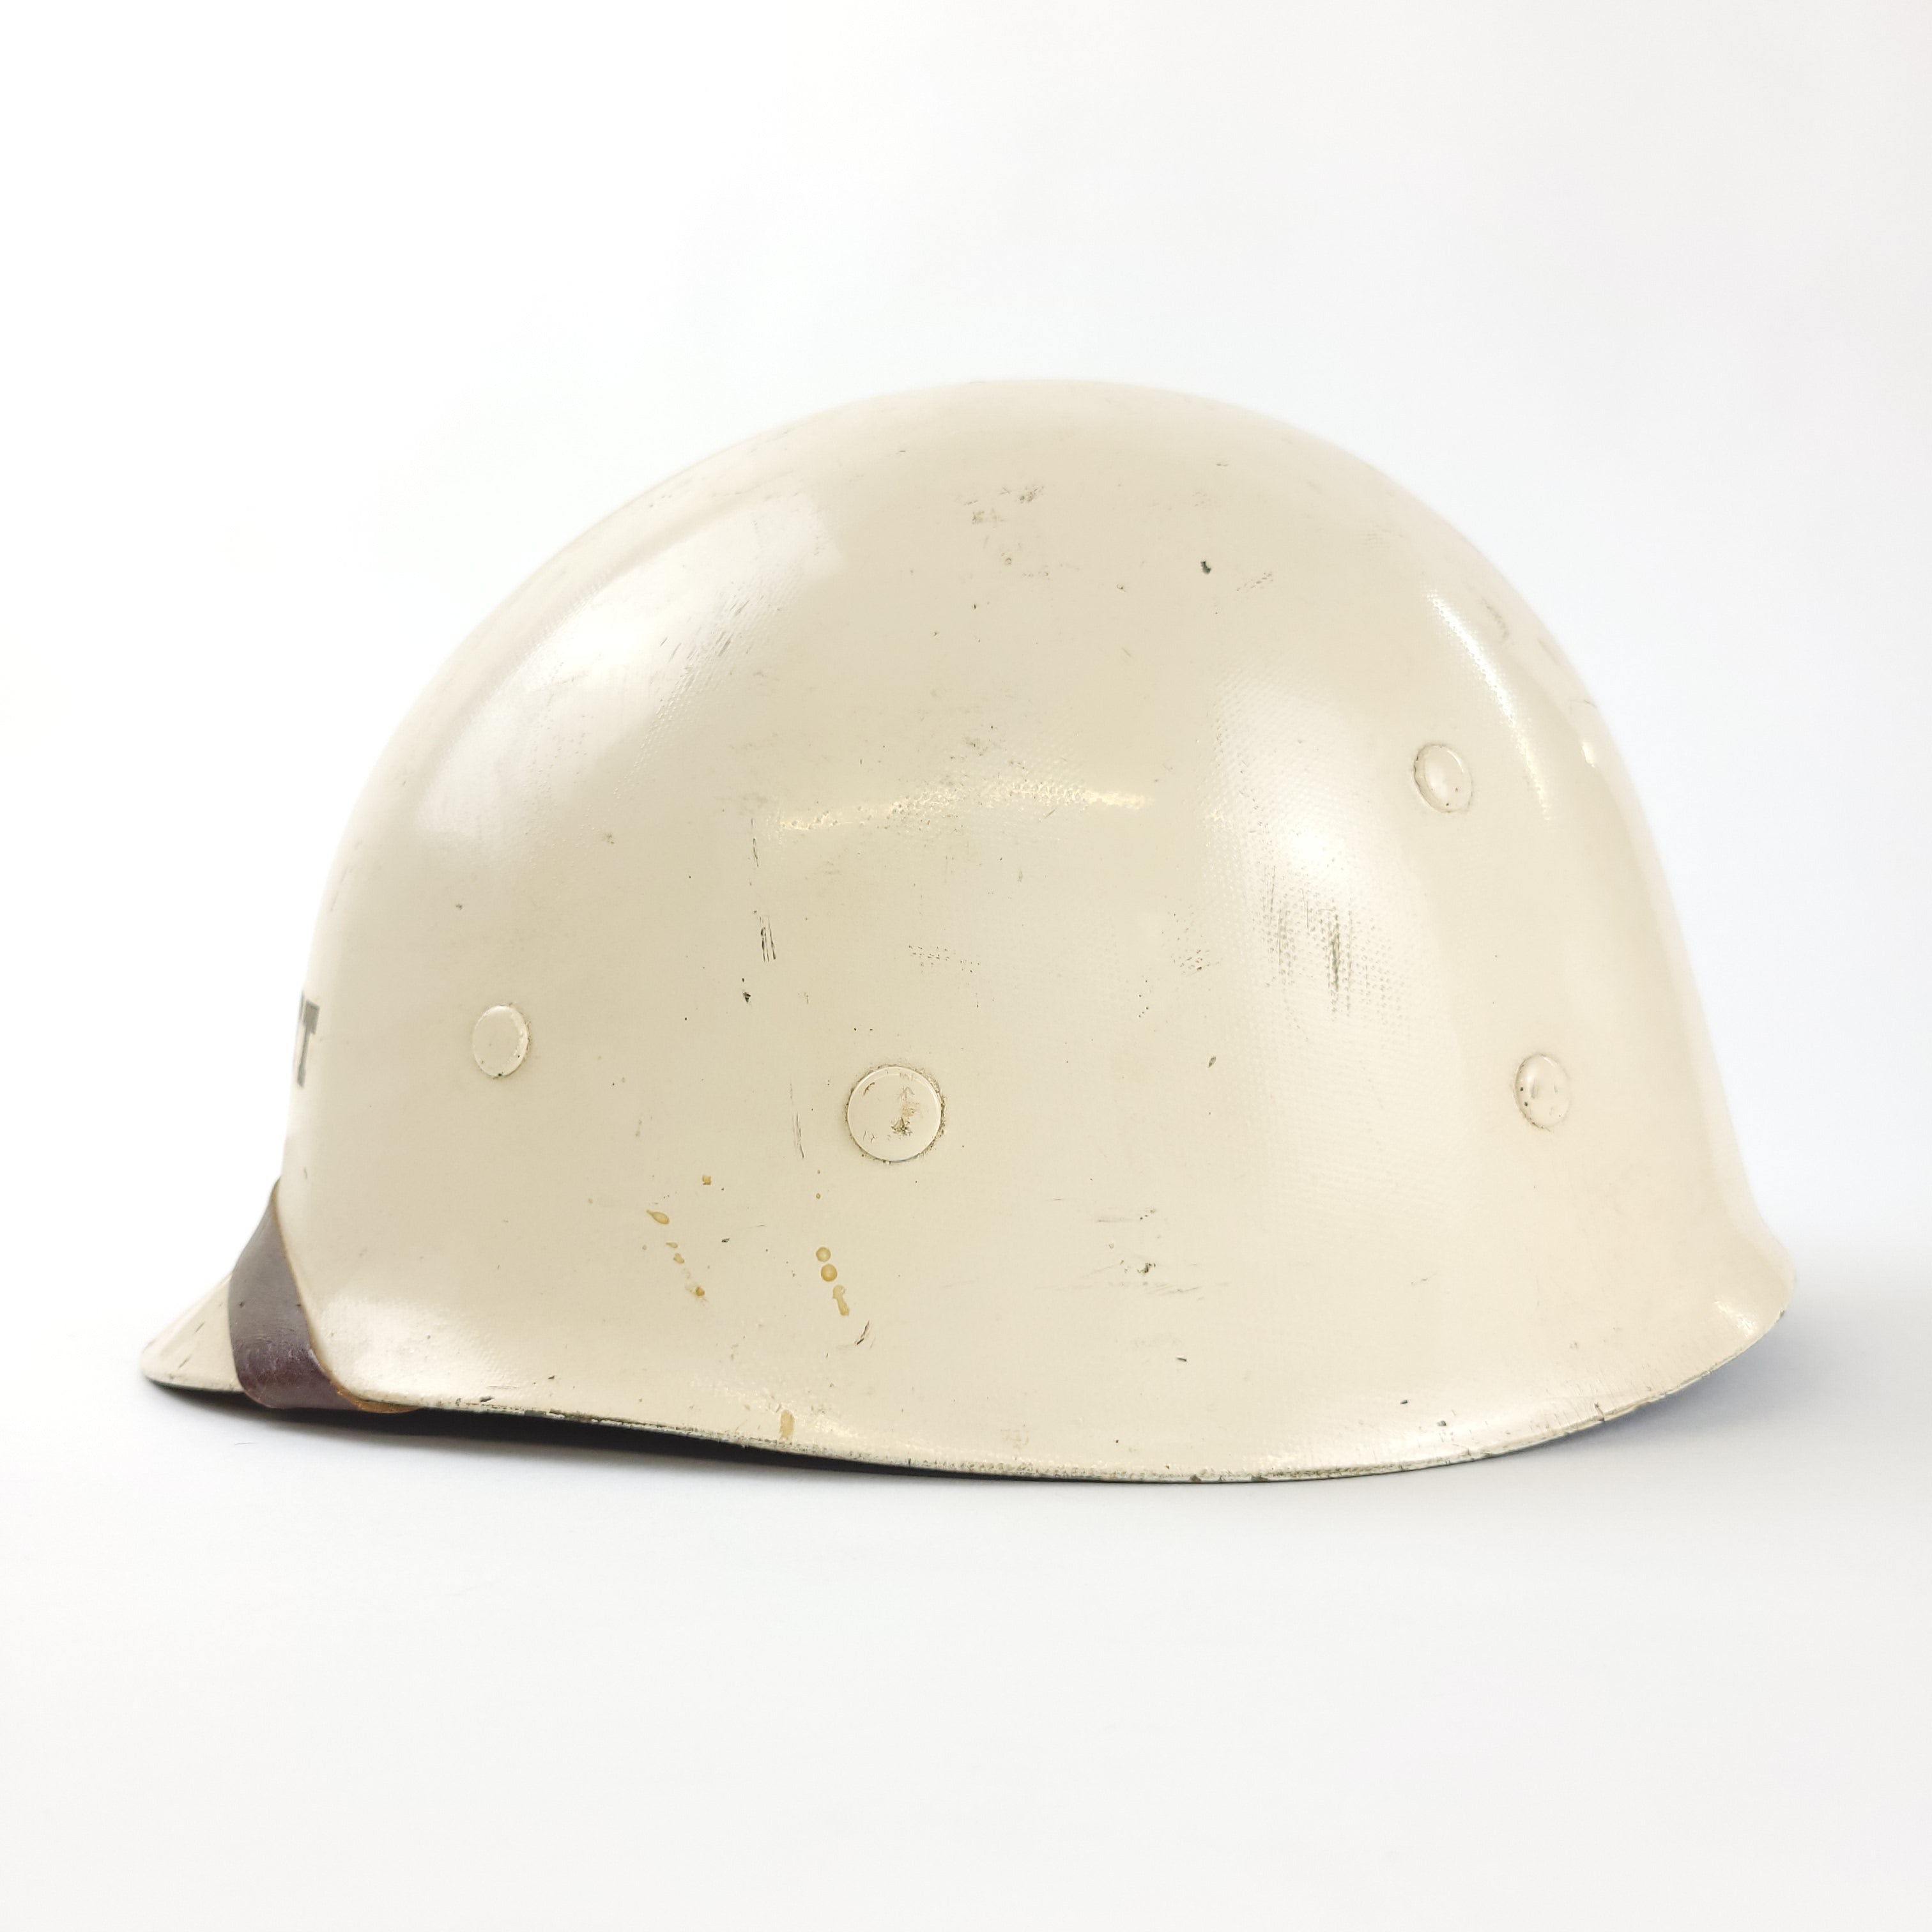 M1 Helmet Liner - Westinghouse - 4th Army 2nd Lt. Named - Complete - Original